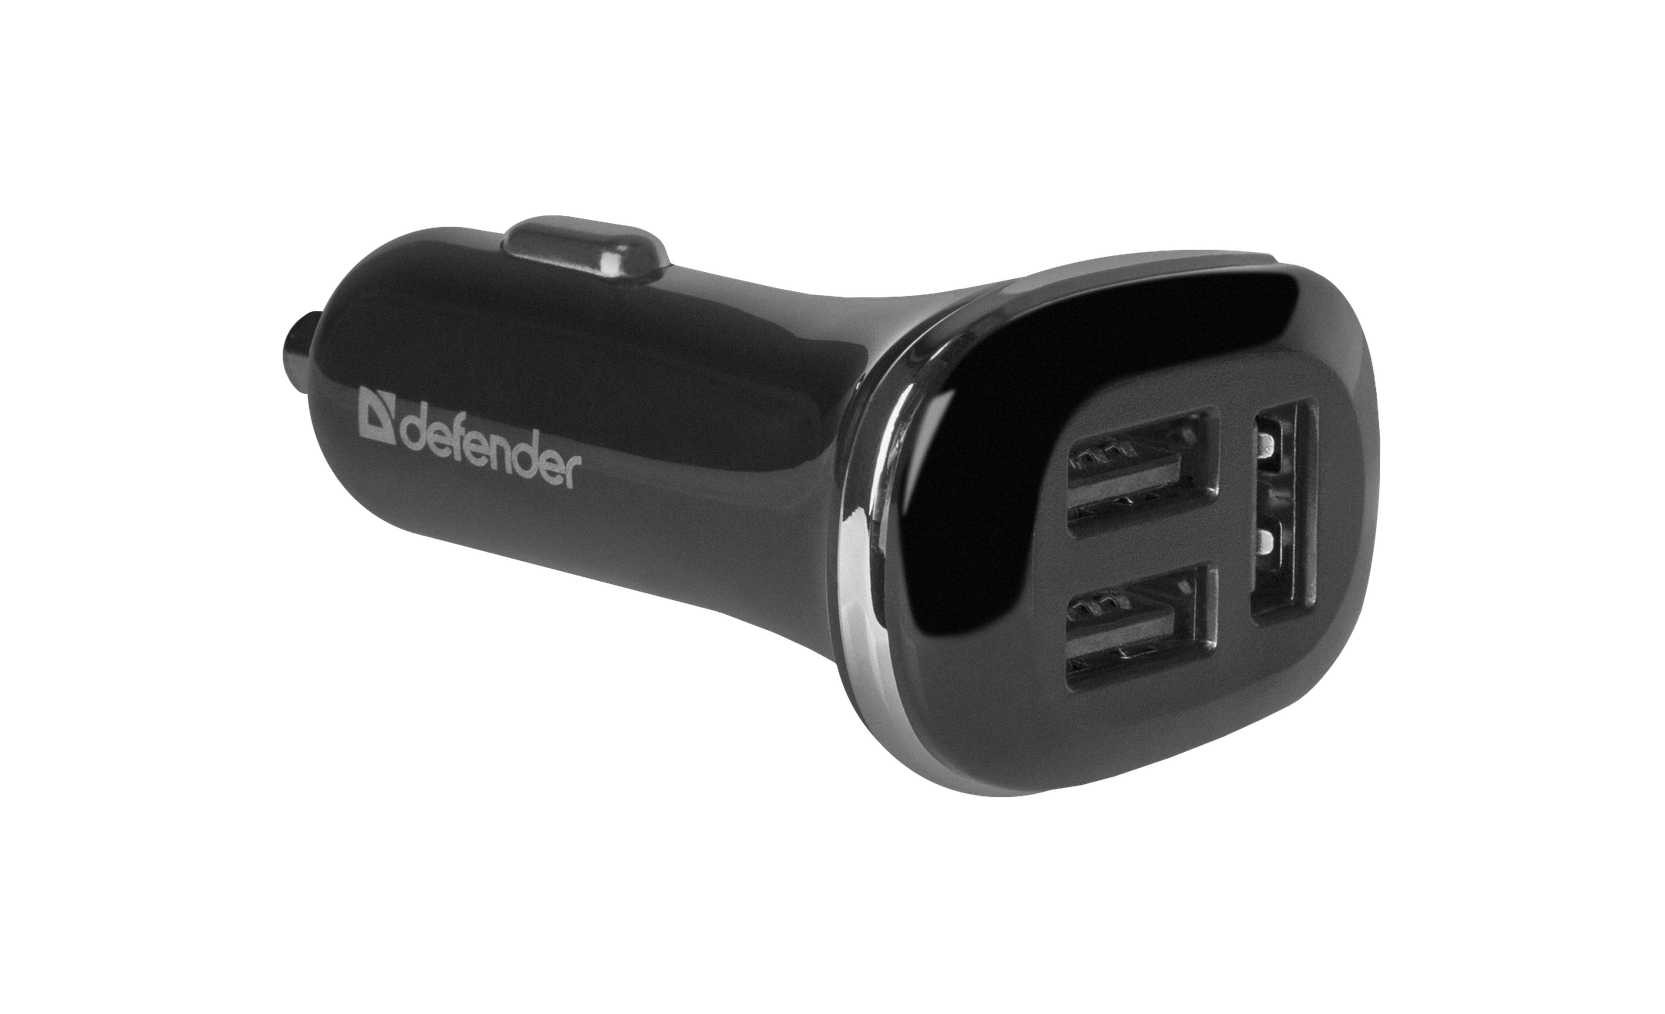 Авто адаптер DEFENDER UCA-50 -3порта USB, 5V/4,8A